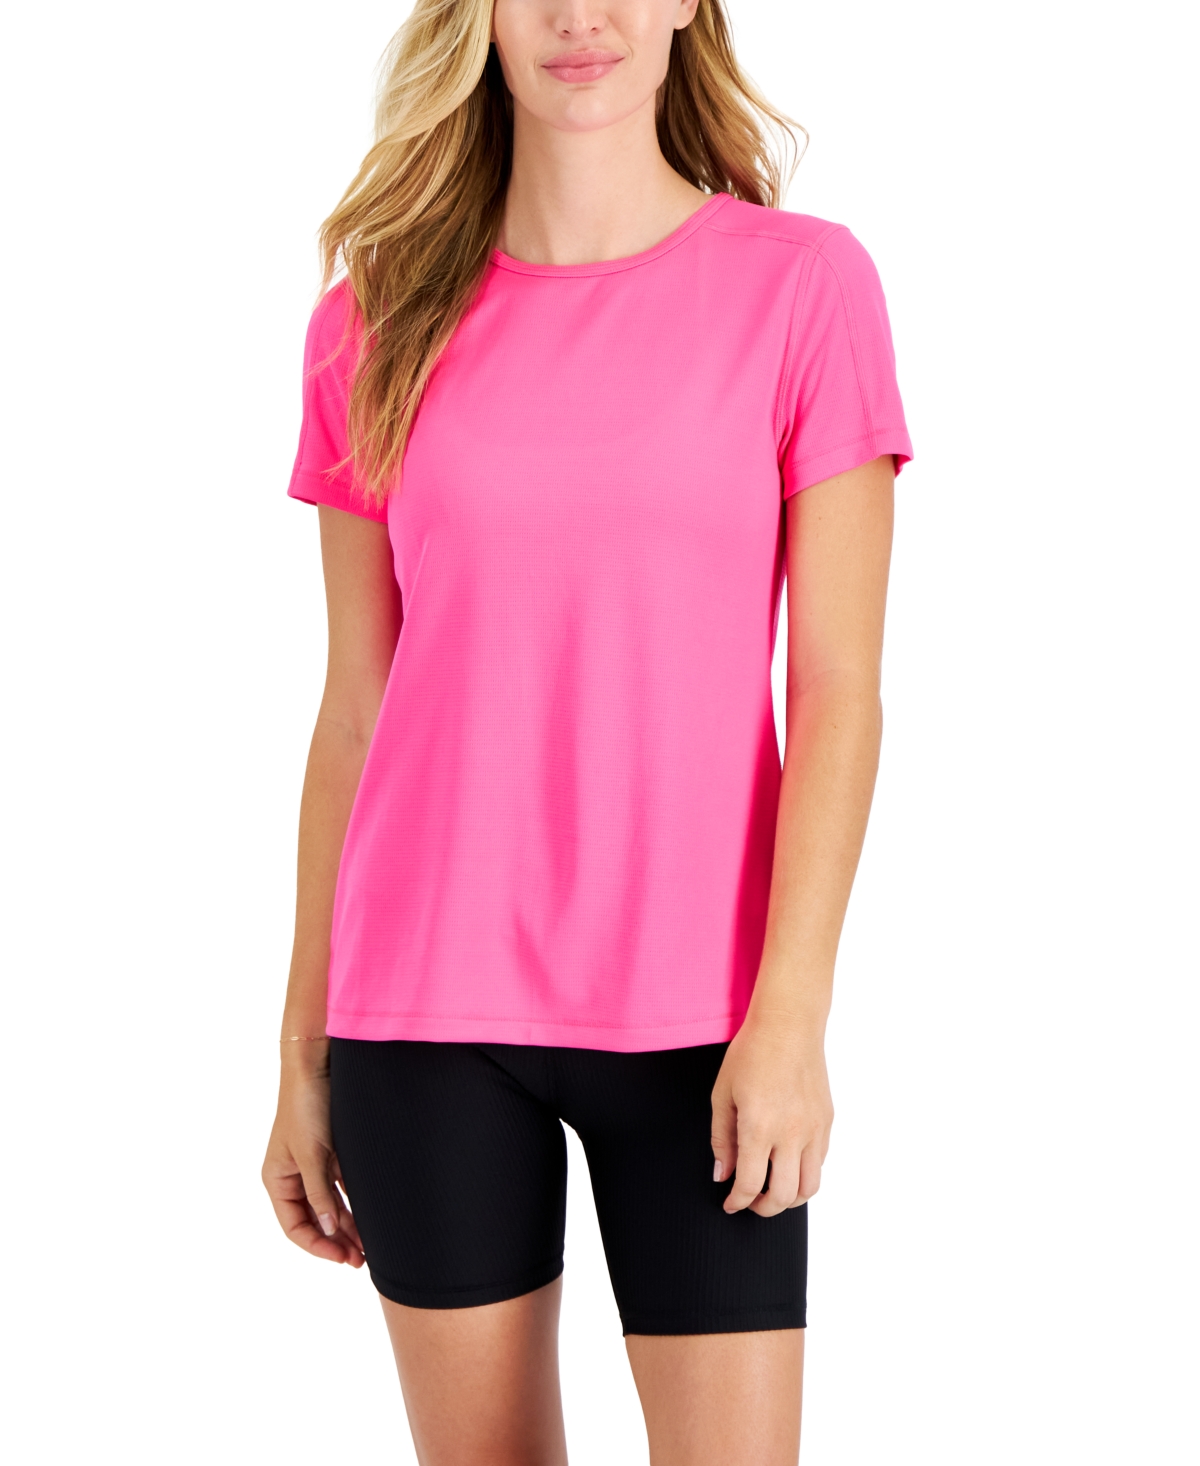 Women's Mesh T-Shirt, Created for Macy's - Molten Pink